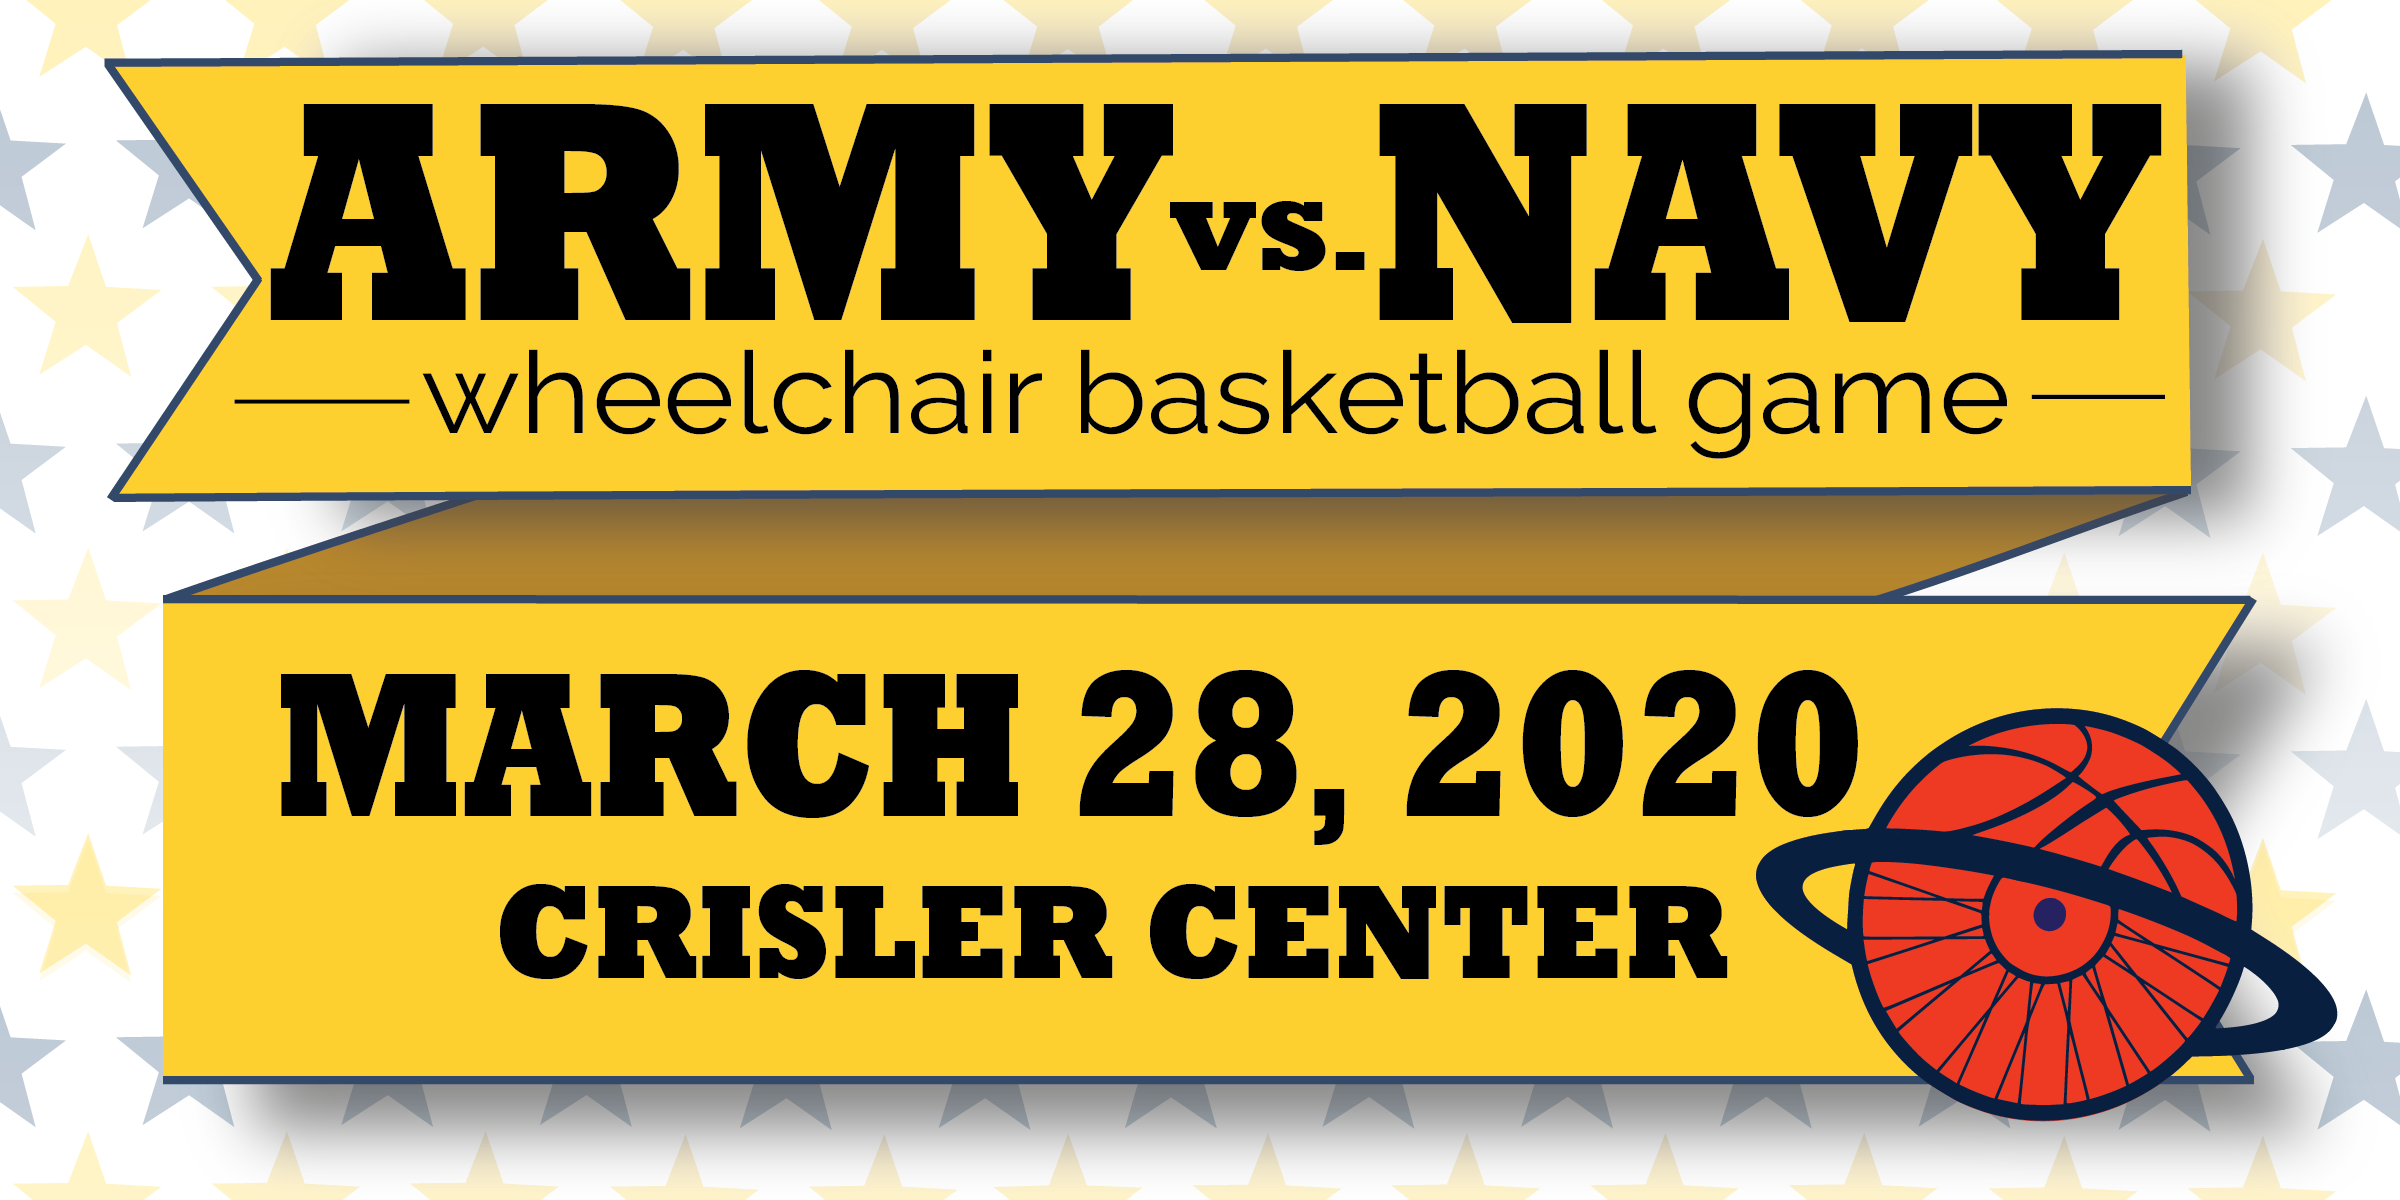 U-M Army vs. Navy wheelchair basketball game - Saturday, March 28, 2020 - Crisler Center